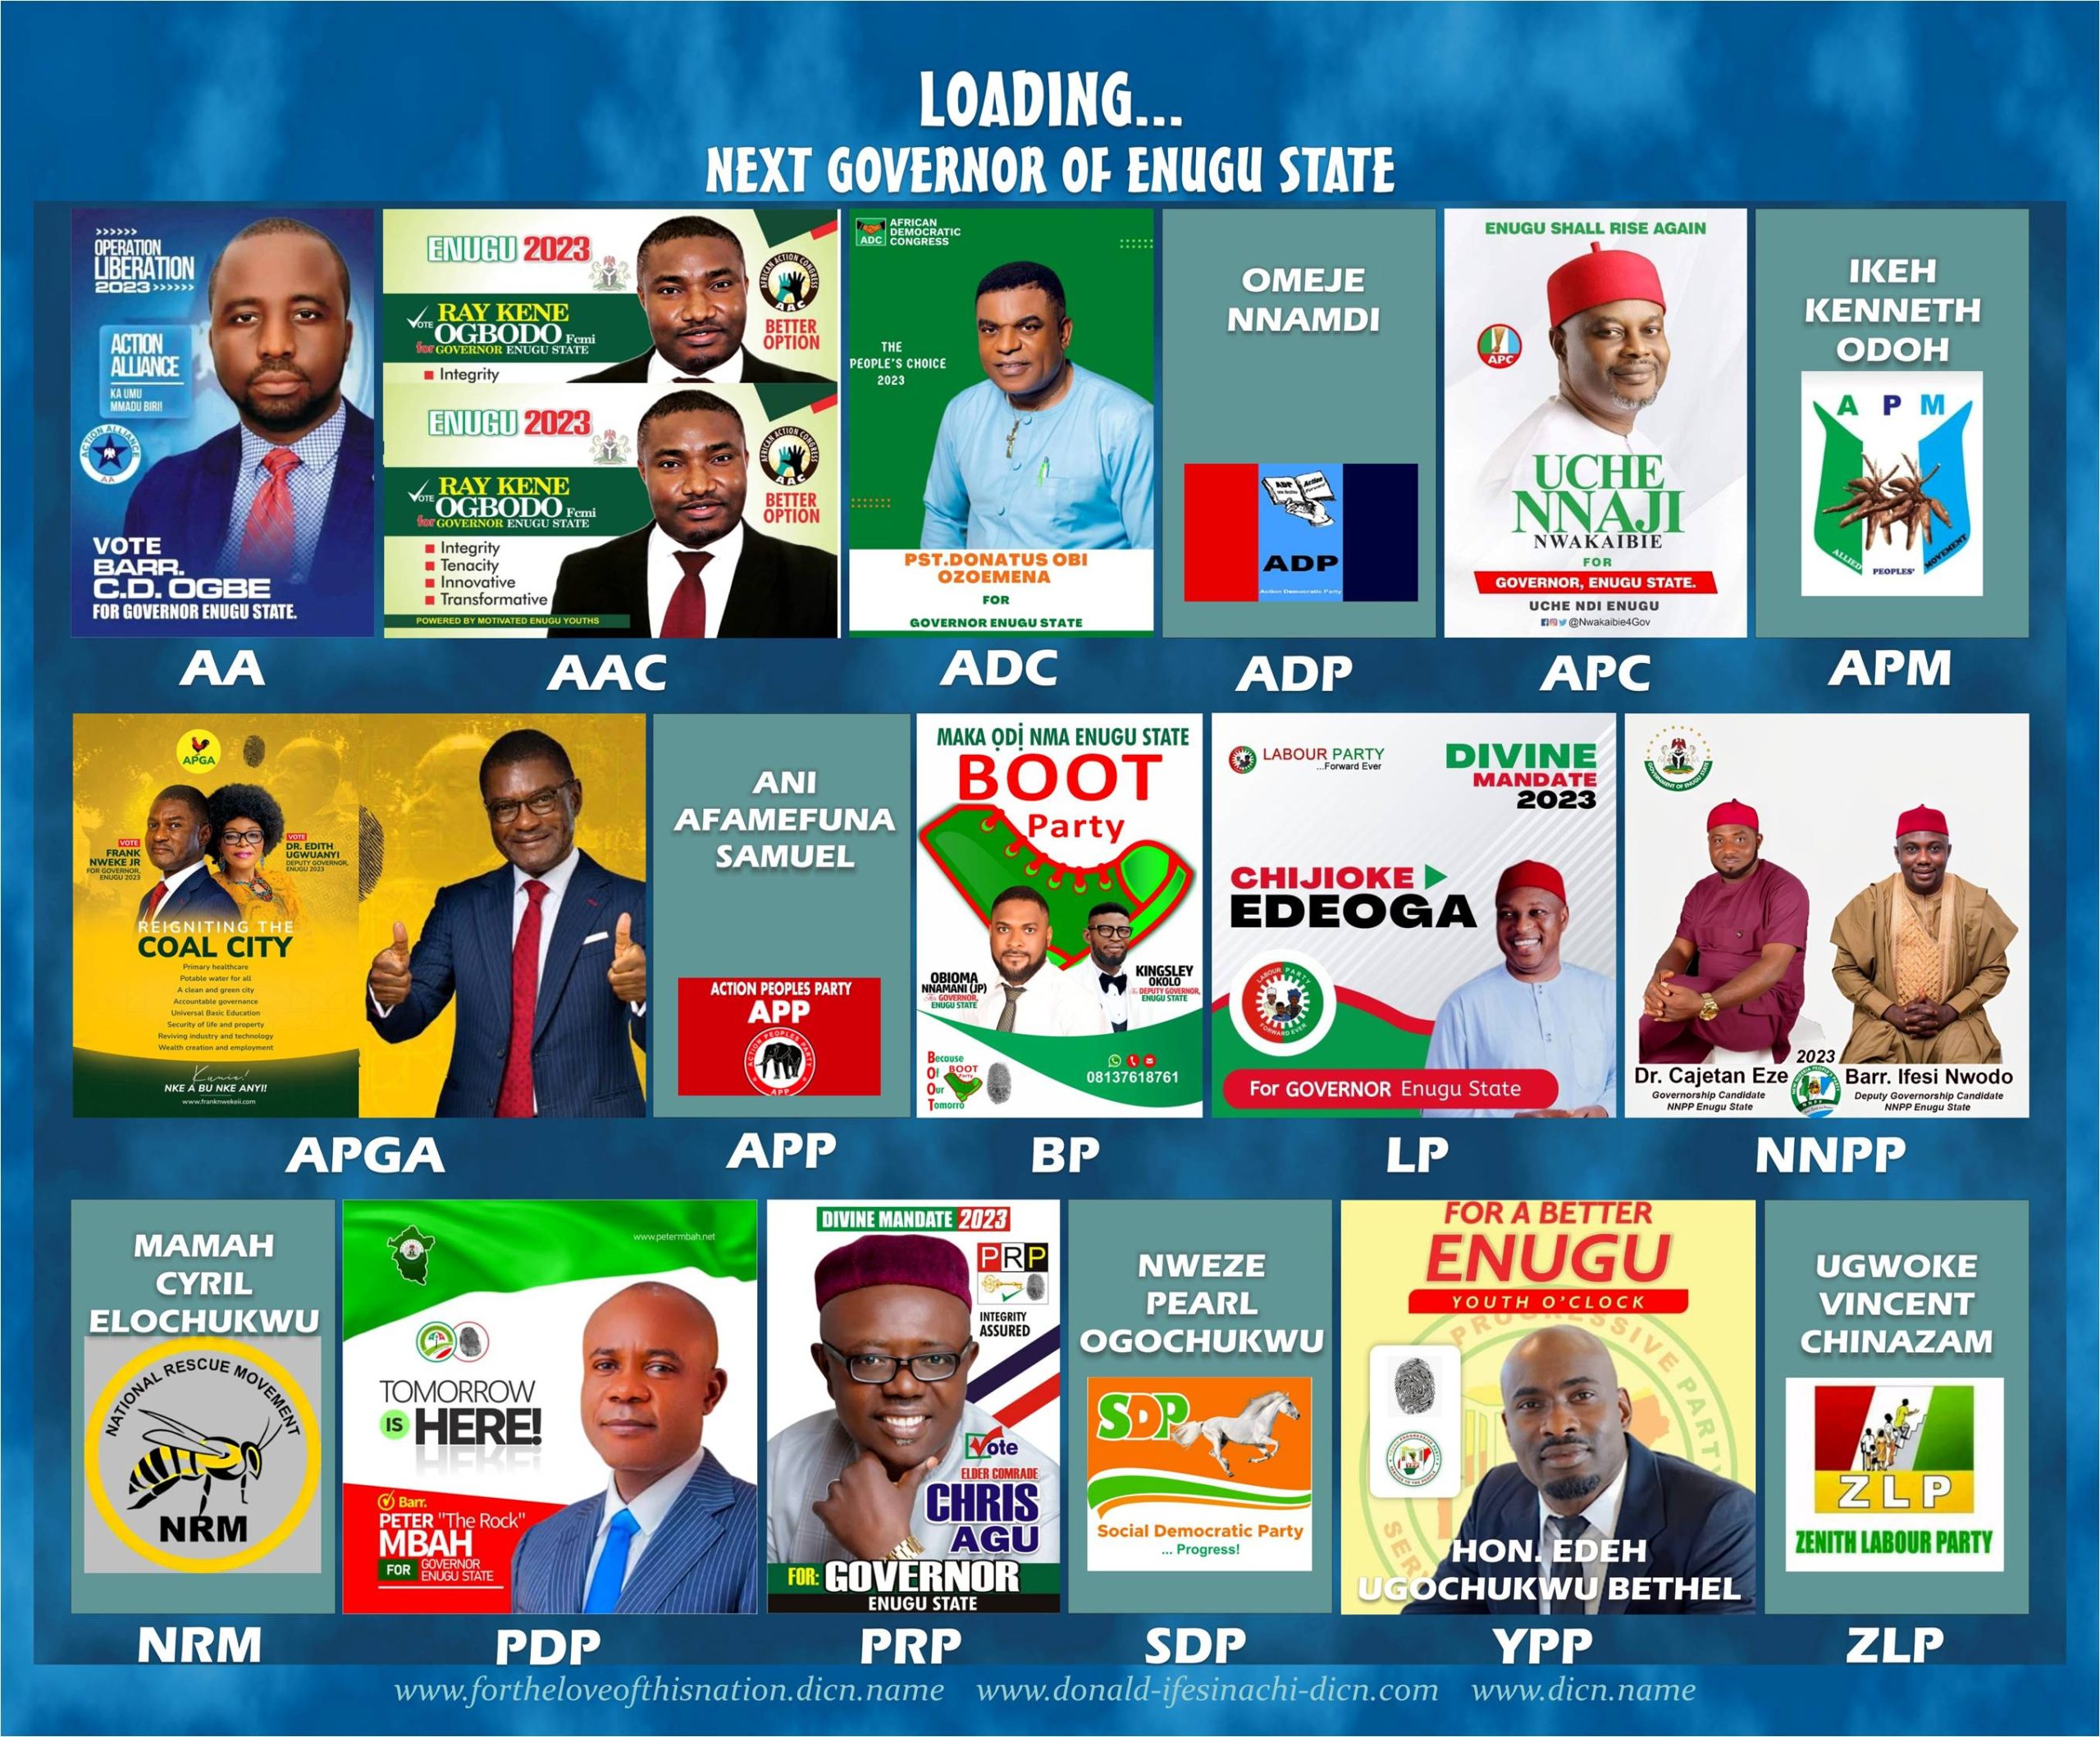 Dicn's 2023 Enugu Guber Candidates Post